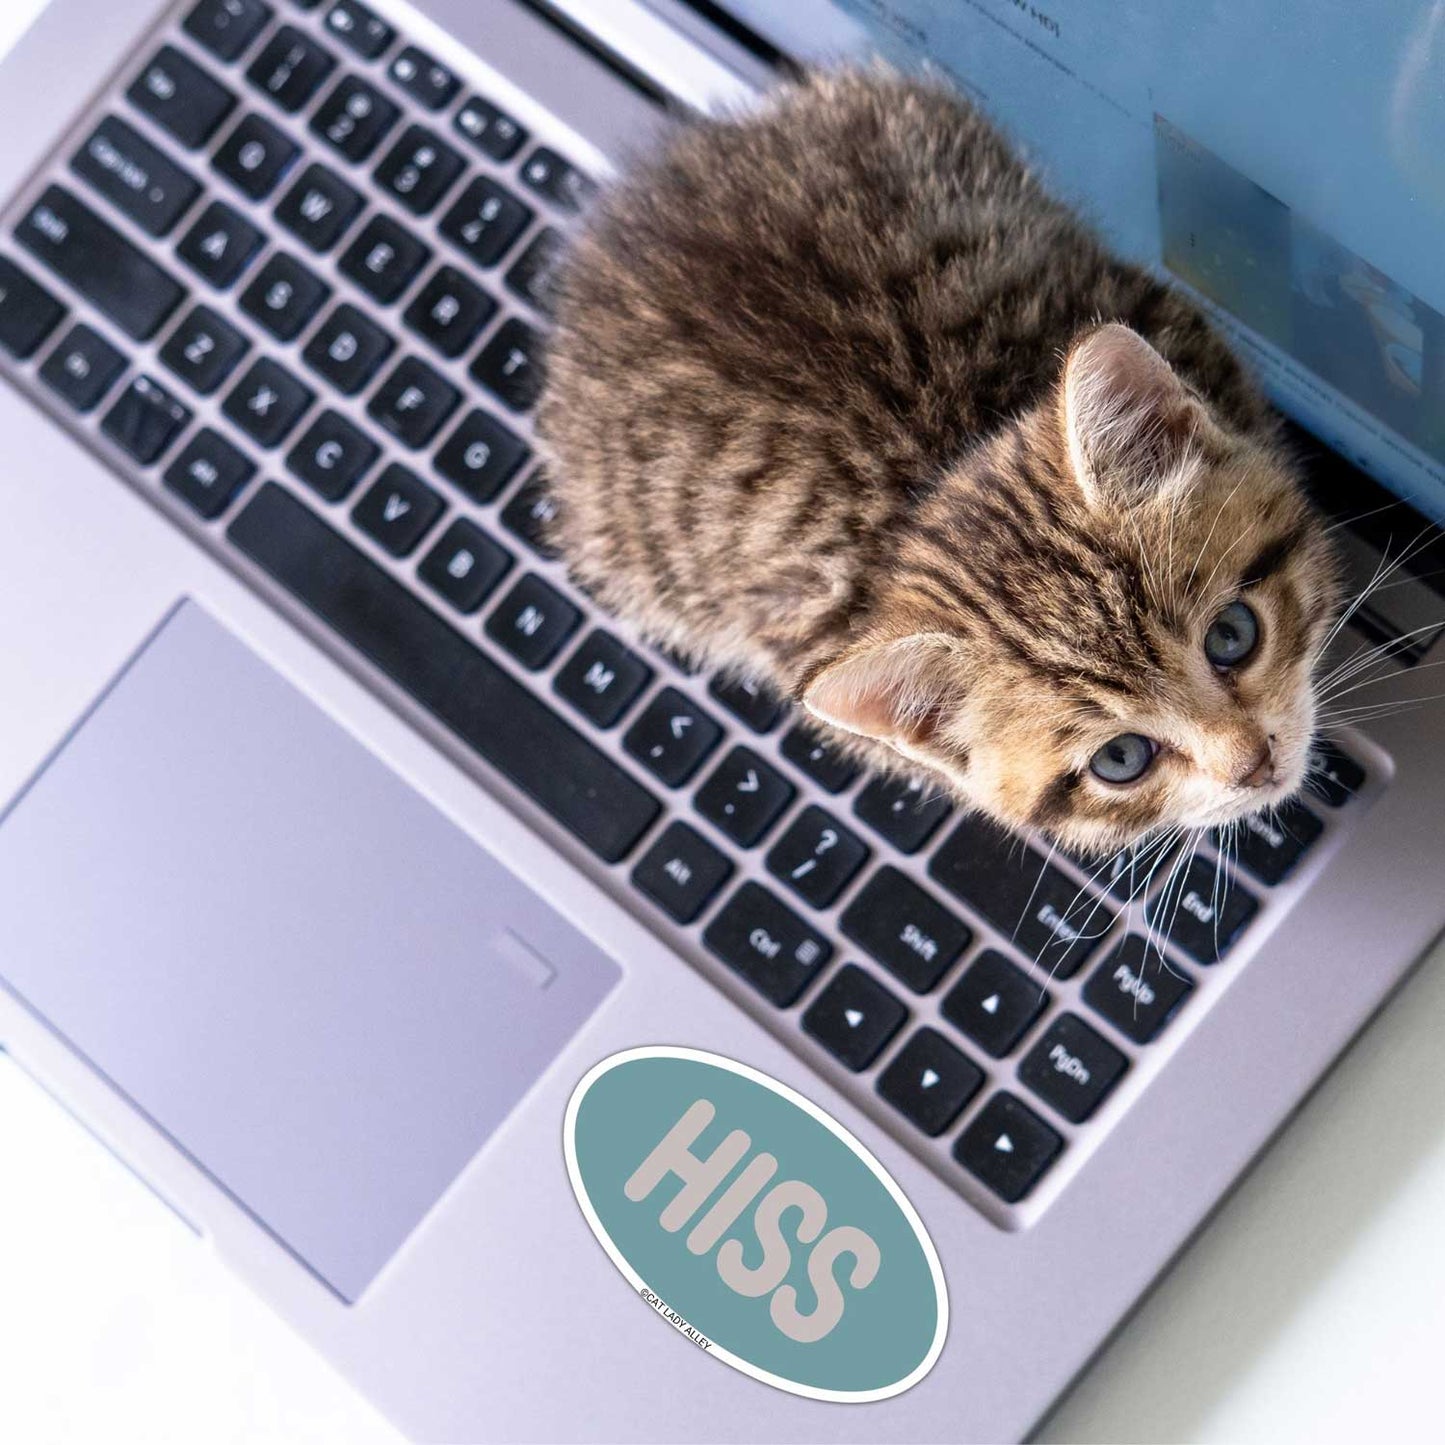 oval hiss cat sticker on laptop